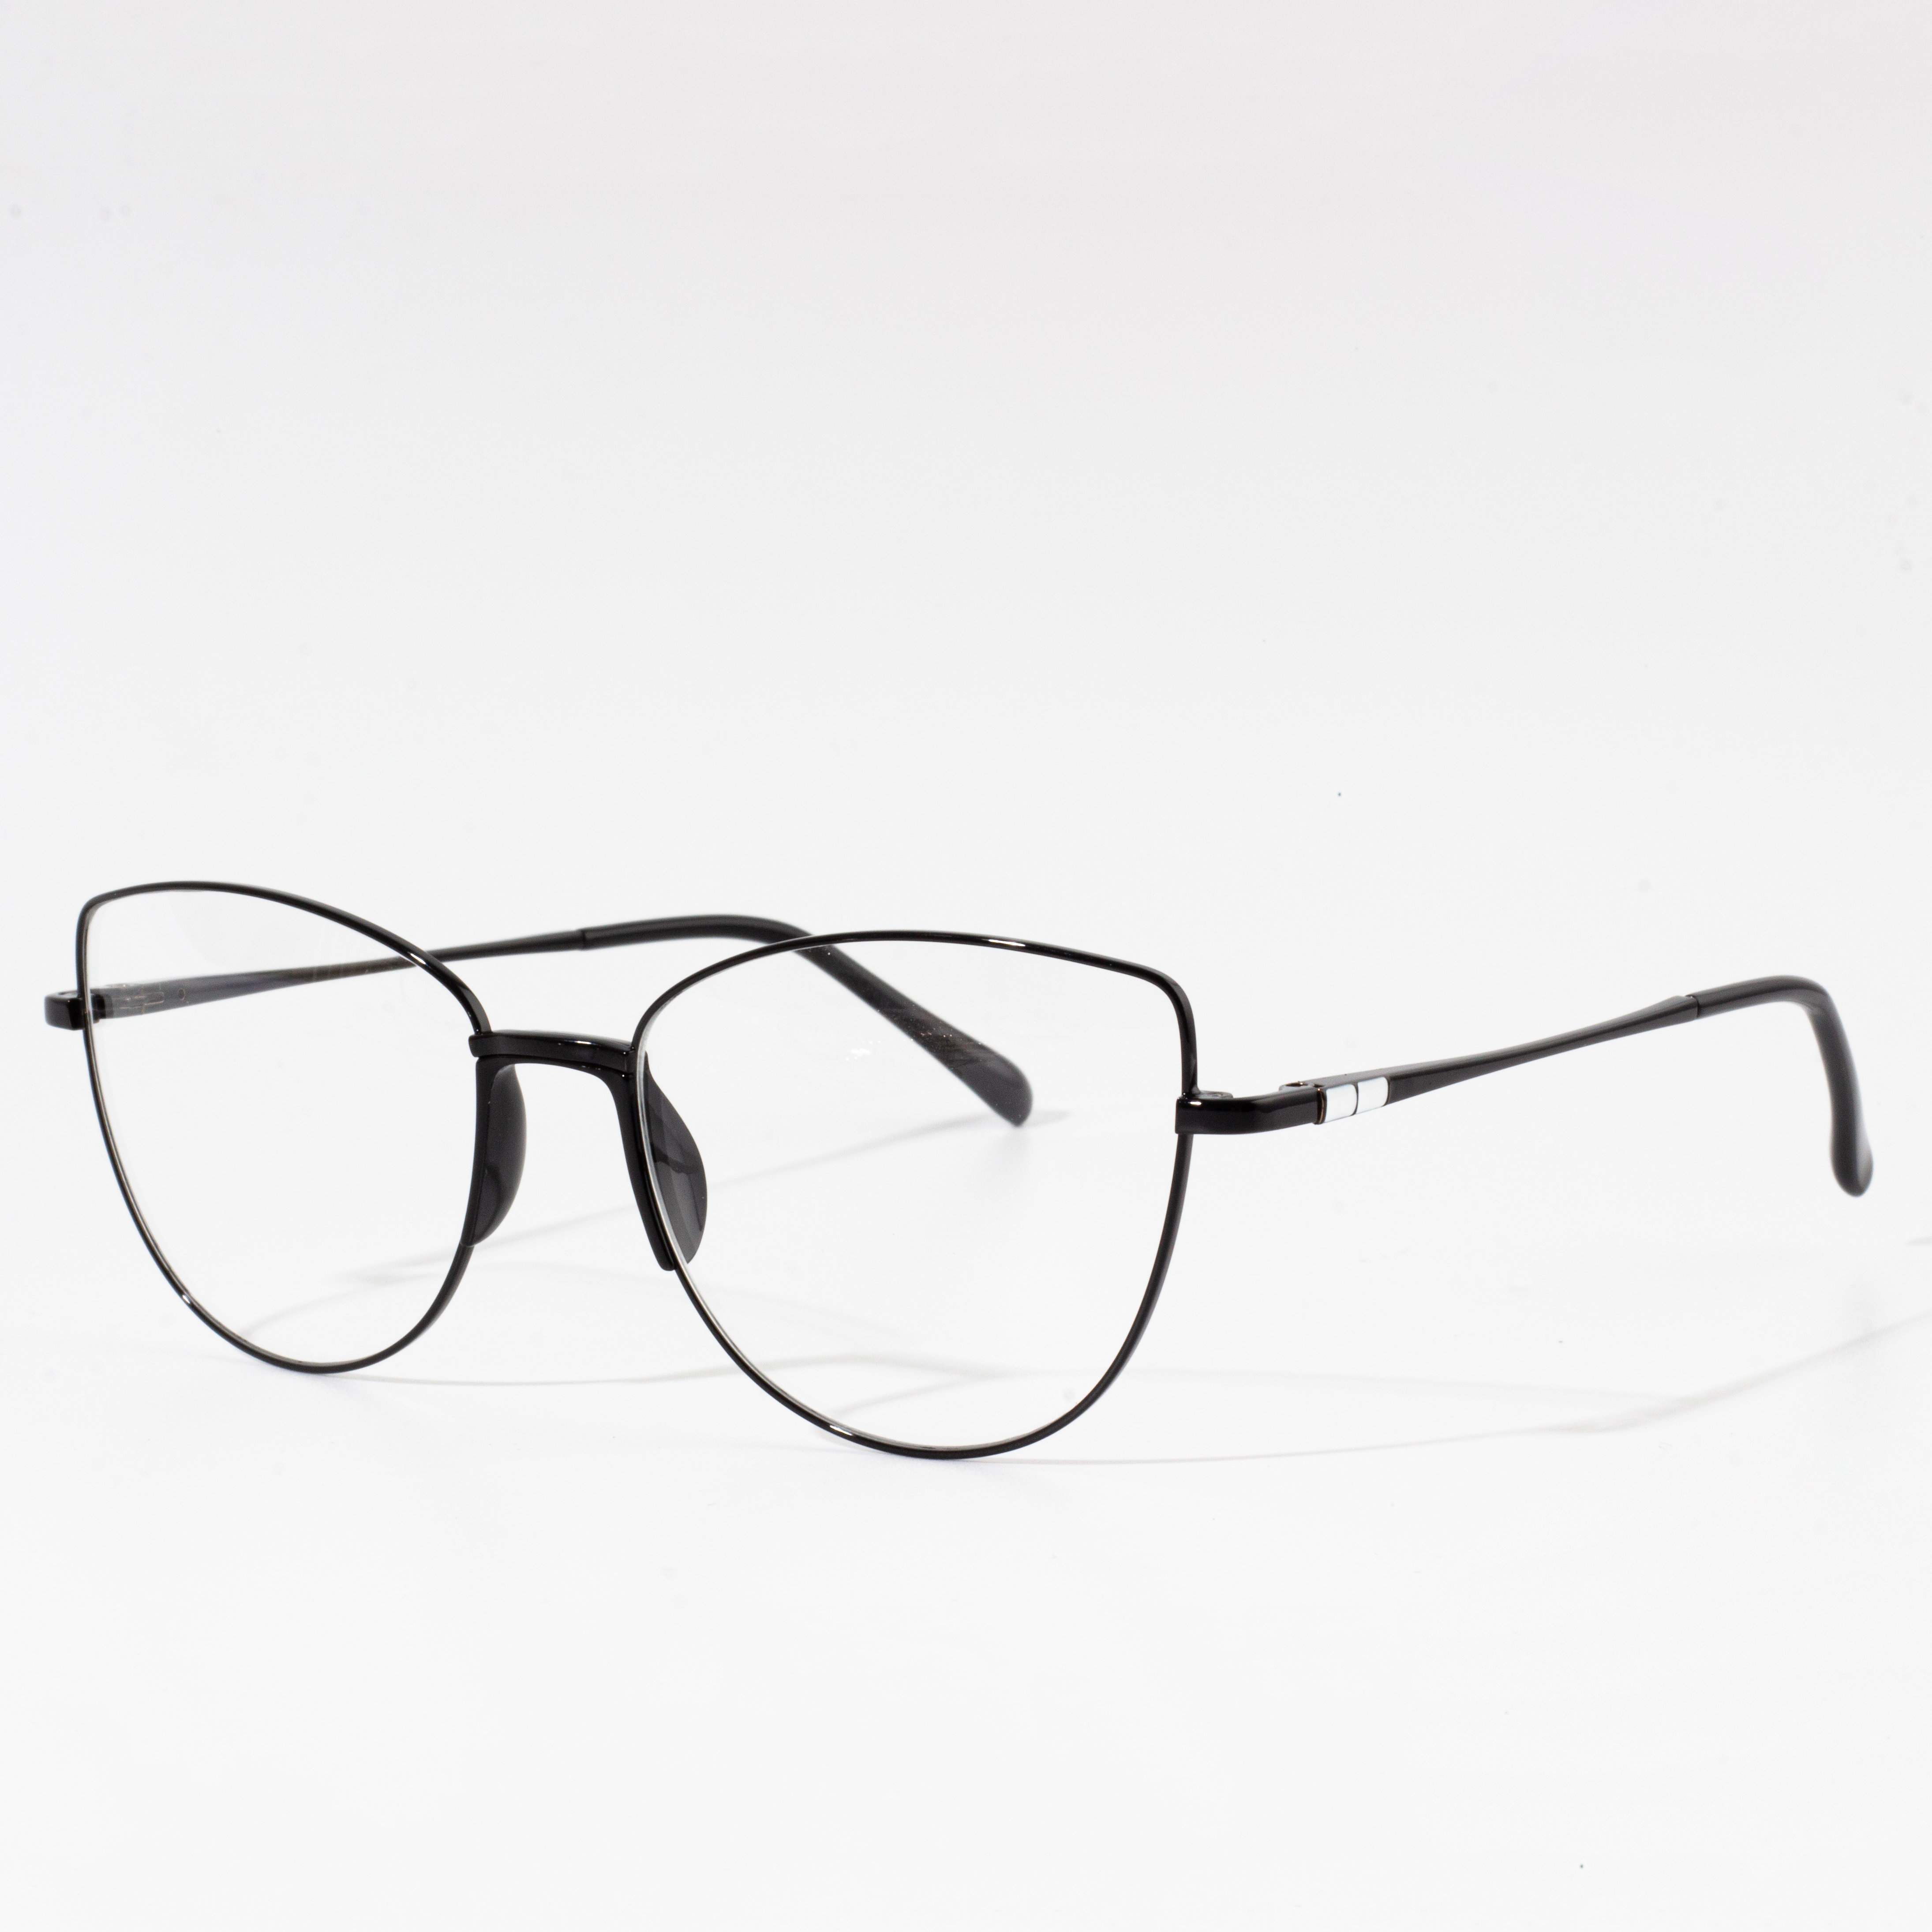 Desain Kacamata Klasik